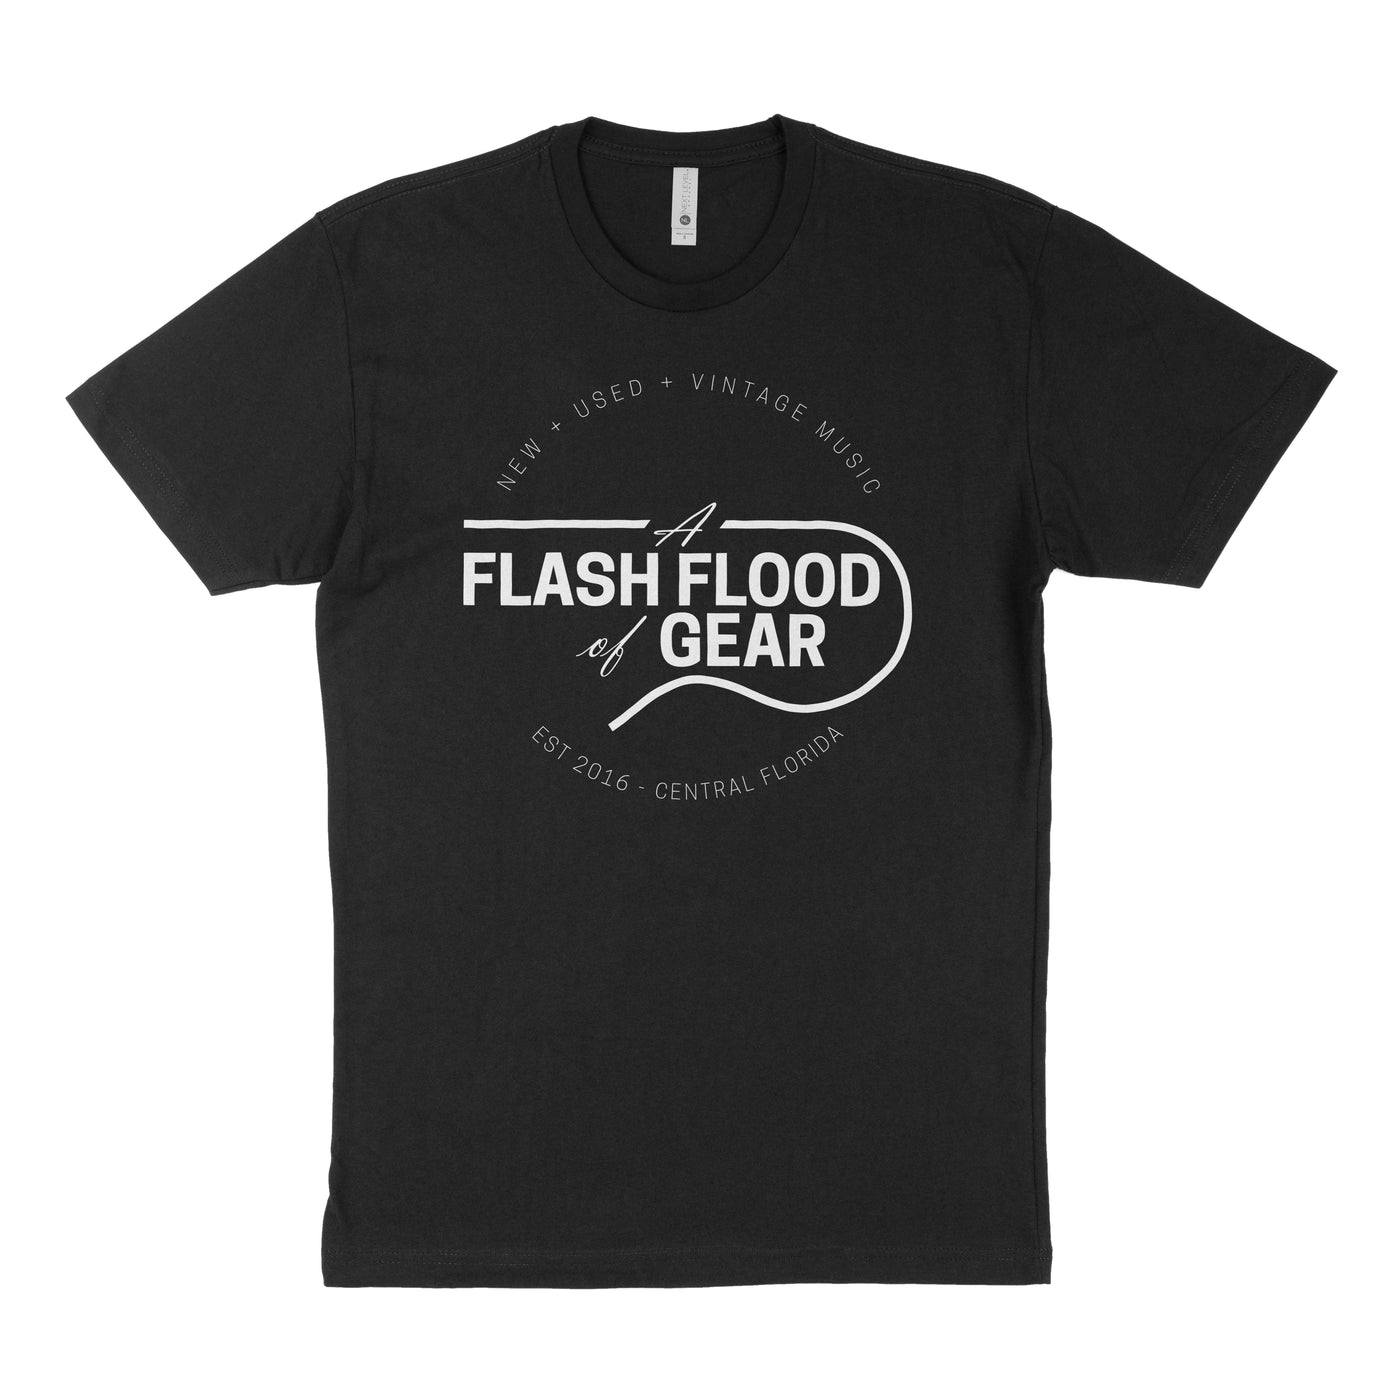 A Flash Flood of Gear Slim Fit T-Shirt Black Guitar Shop Shirt - Medium M